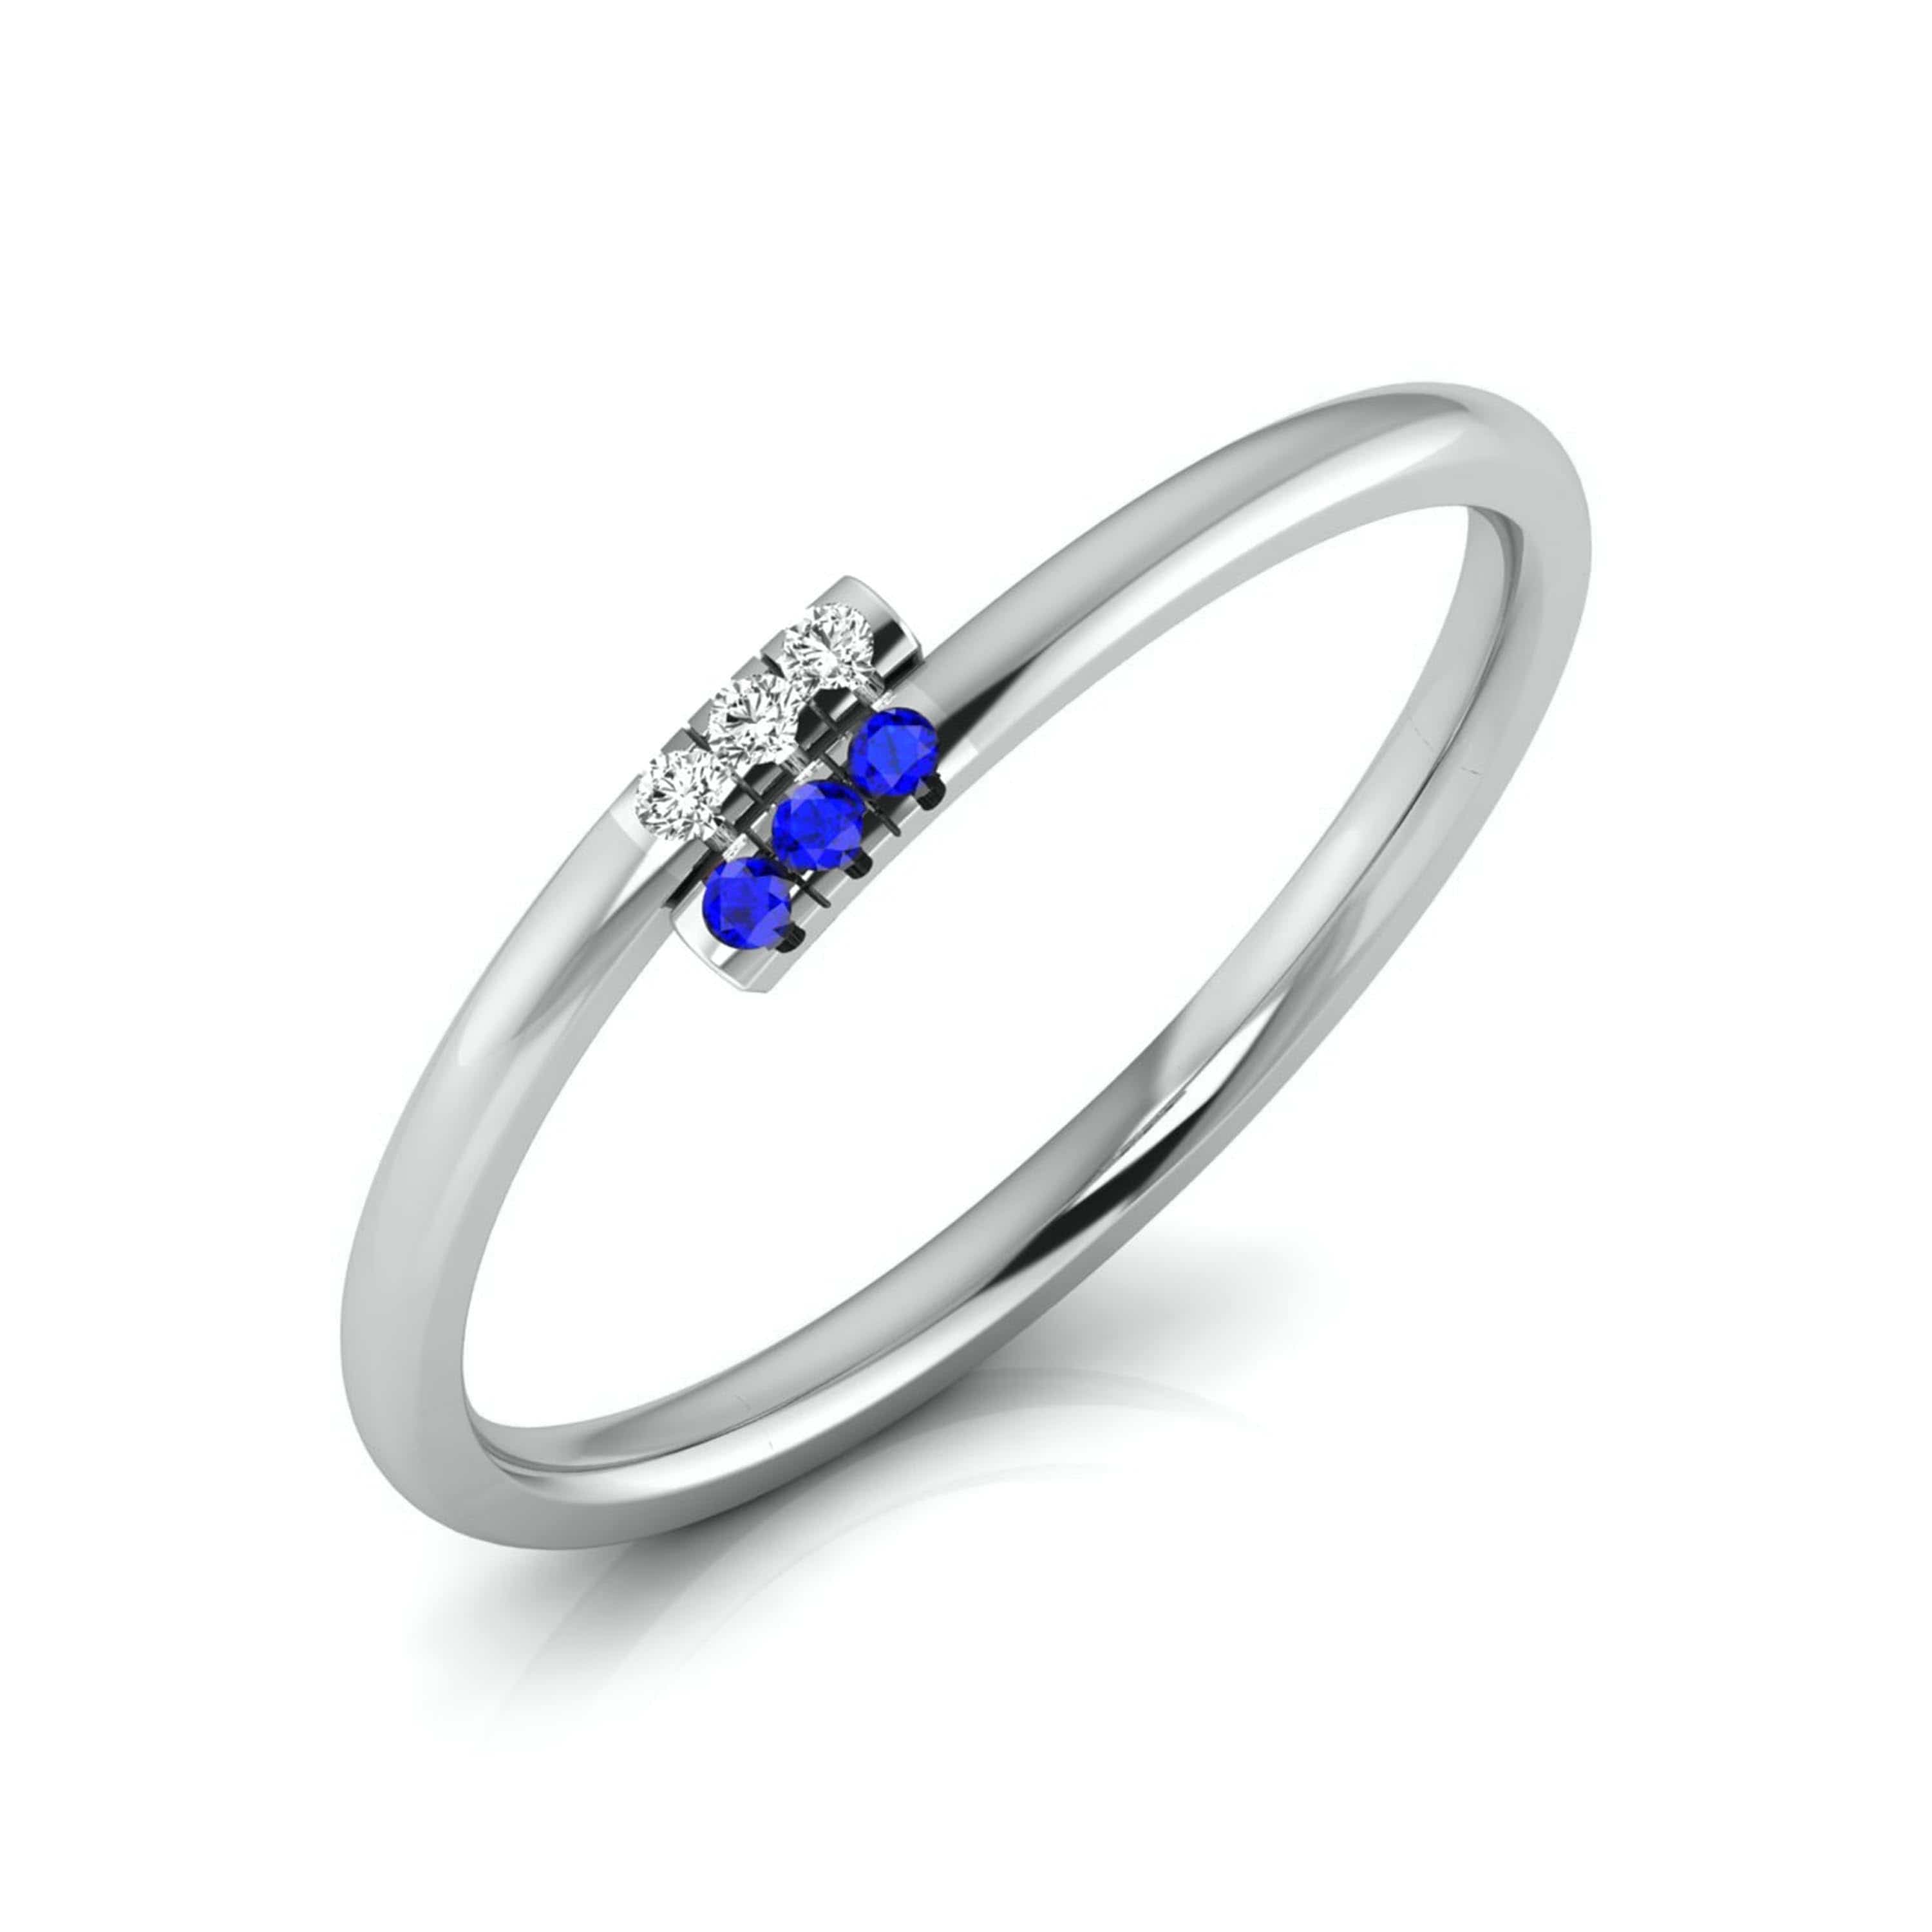 5 Carat Princess Cut Diamond Engagement Ring 5.00ct I/SI2 GIA